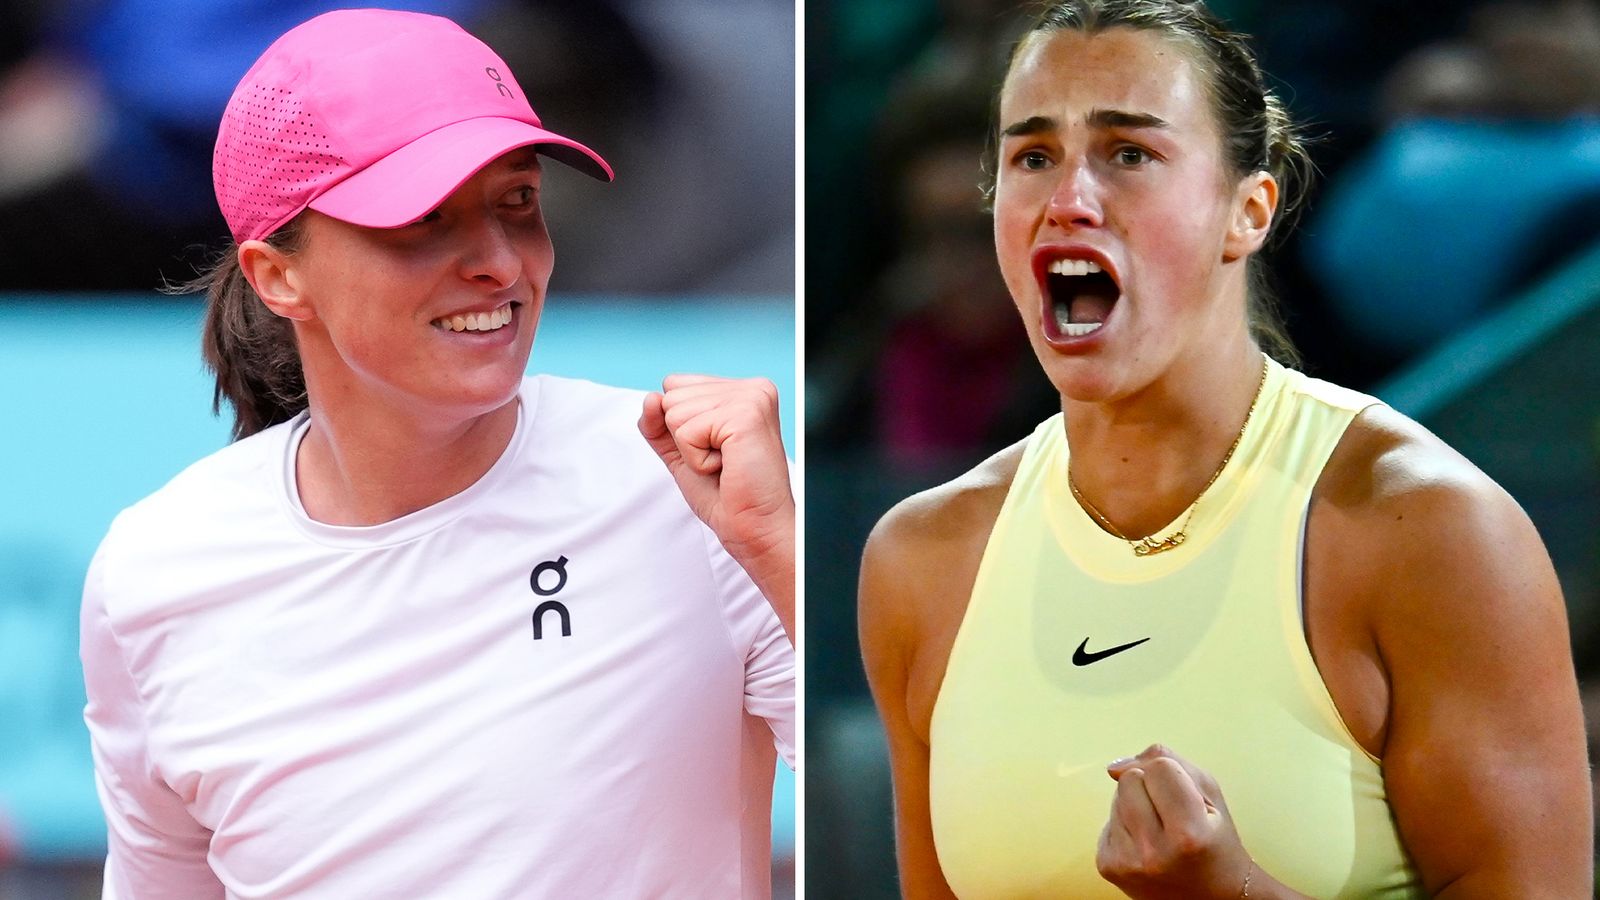 A new era for women’s tennis? Iga Swiatek against Aryna Sabalenka proved a point in the Madrid Open final | Tennis News